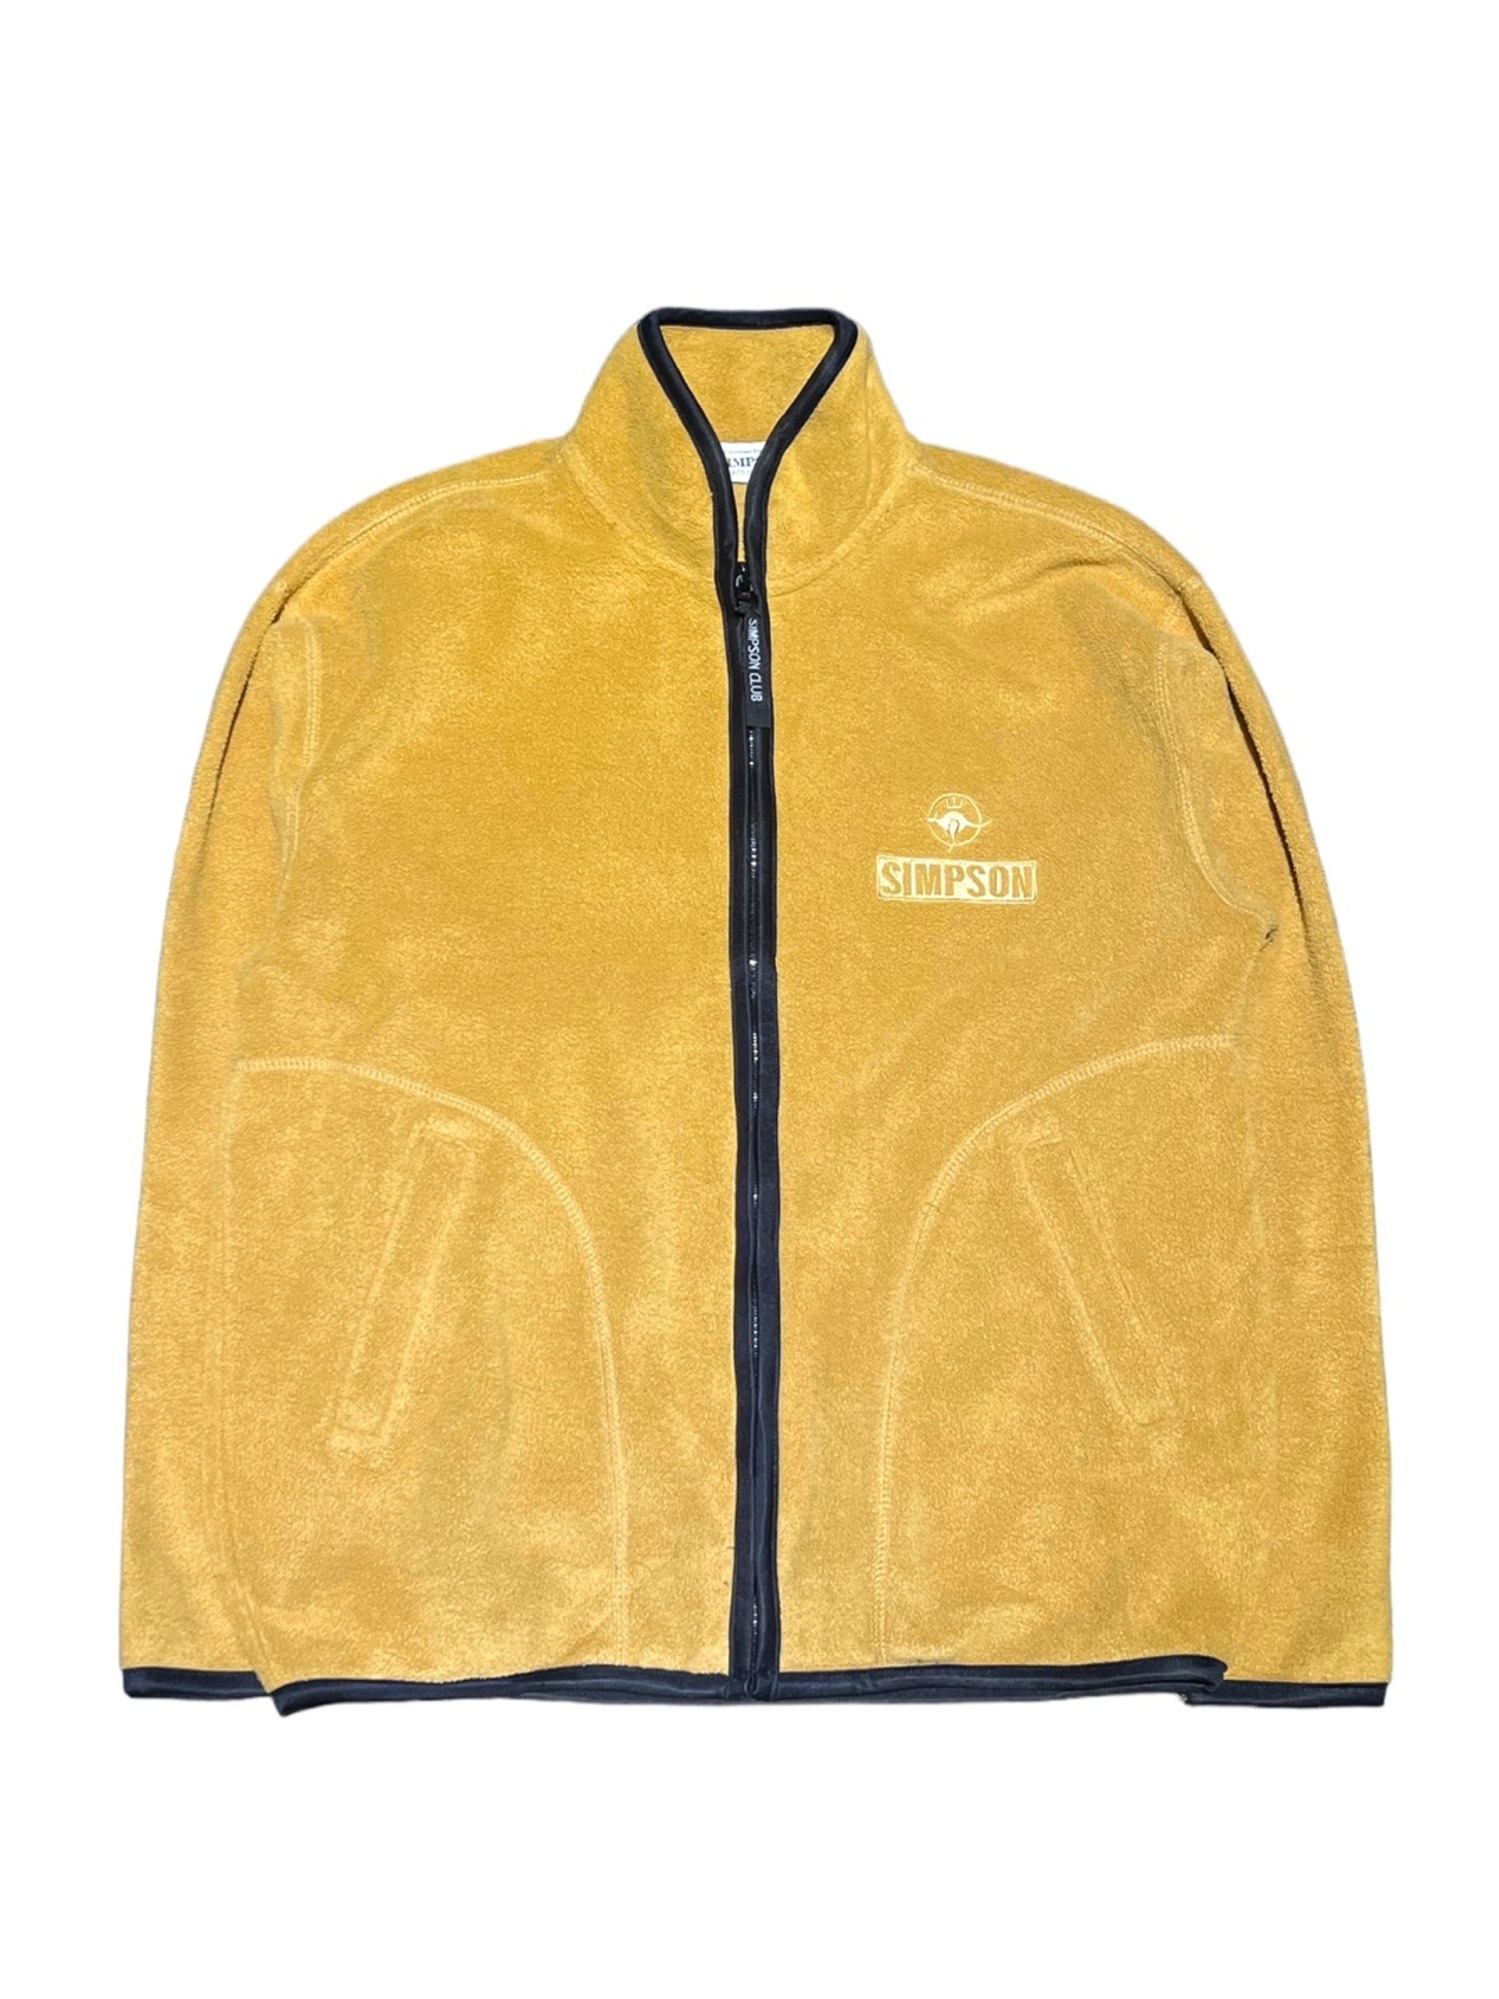 Simpson Sports Casual Yellow Fleece Jacket